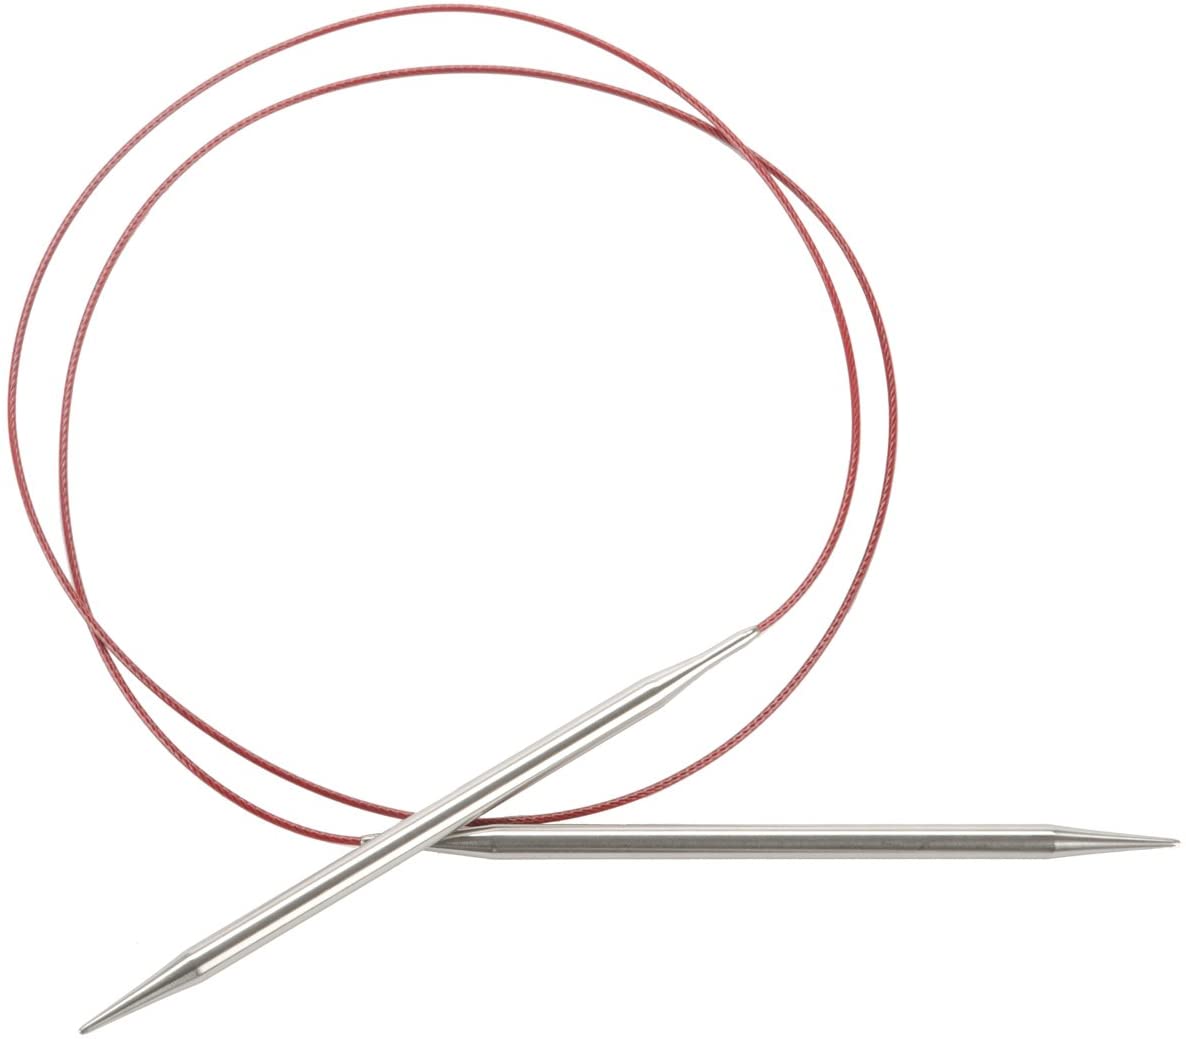 ChiaoGoo Red Lace Circular Needles